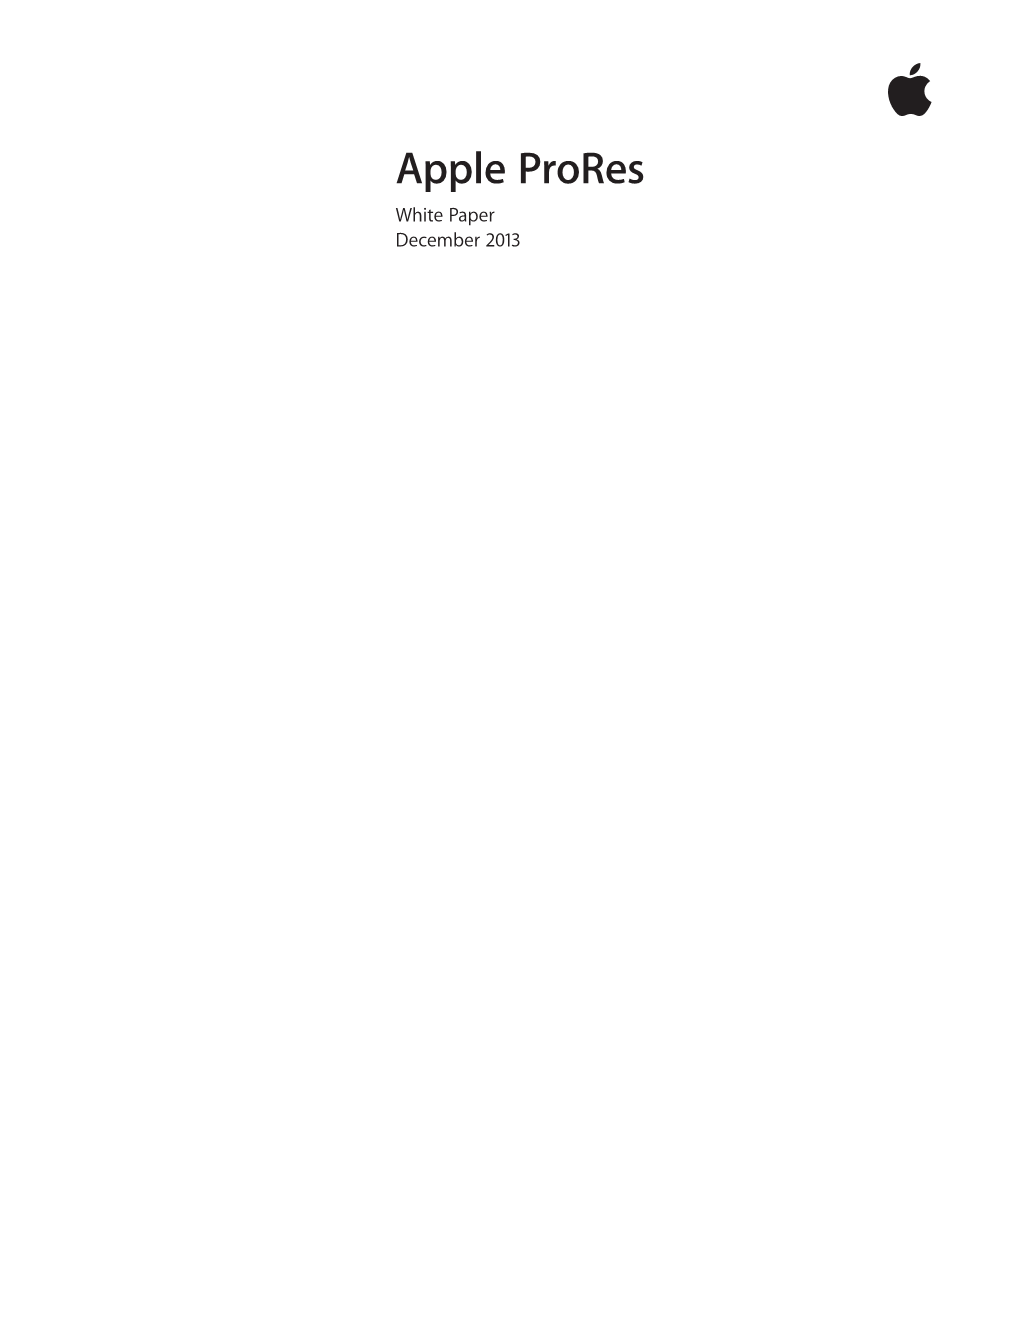 Apple Prores White Paper December 2013 White Paper 2 Apple Prores